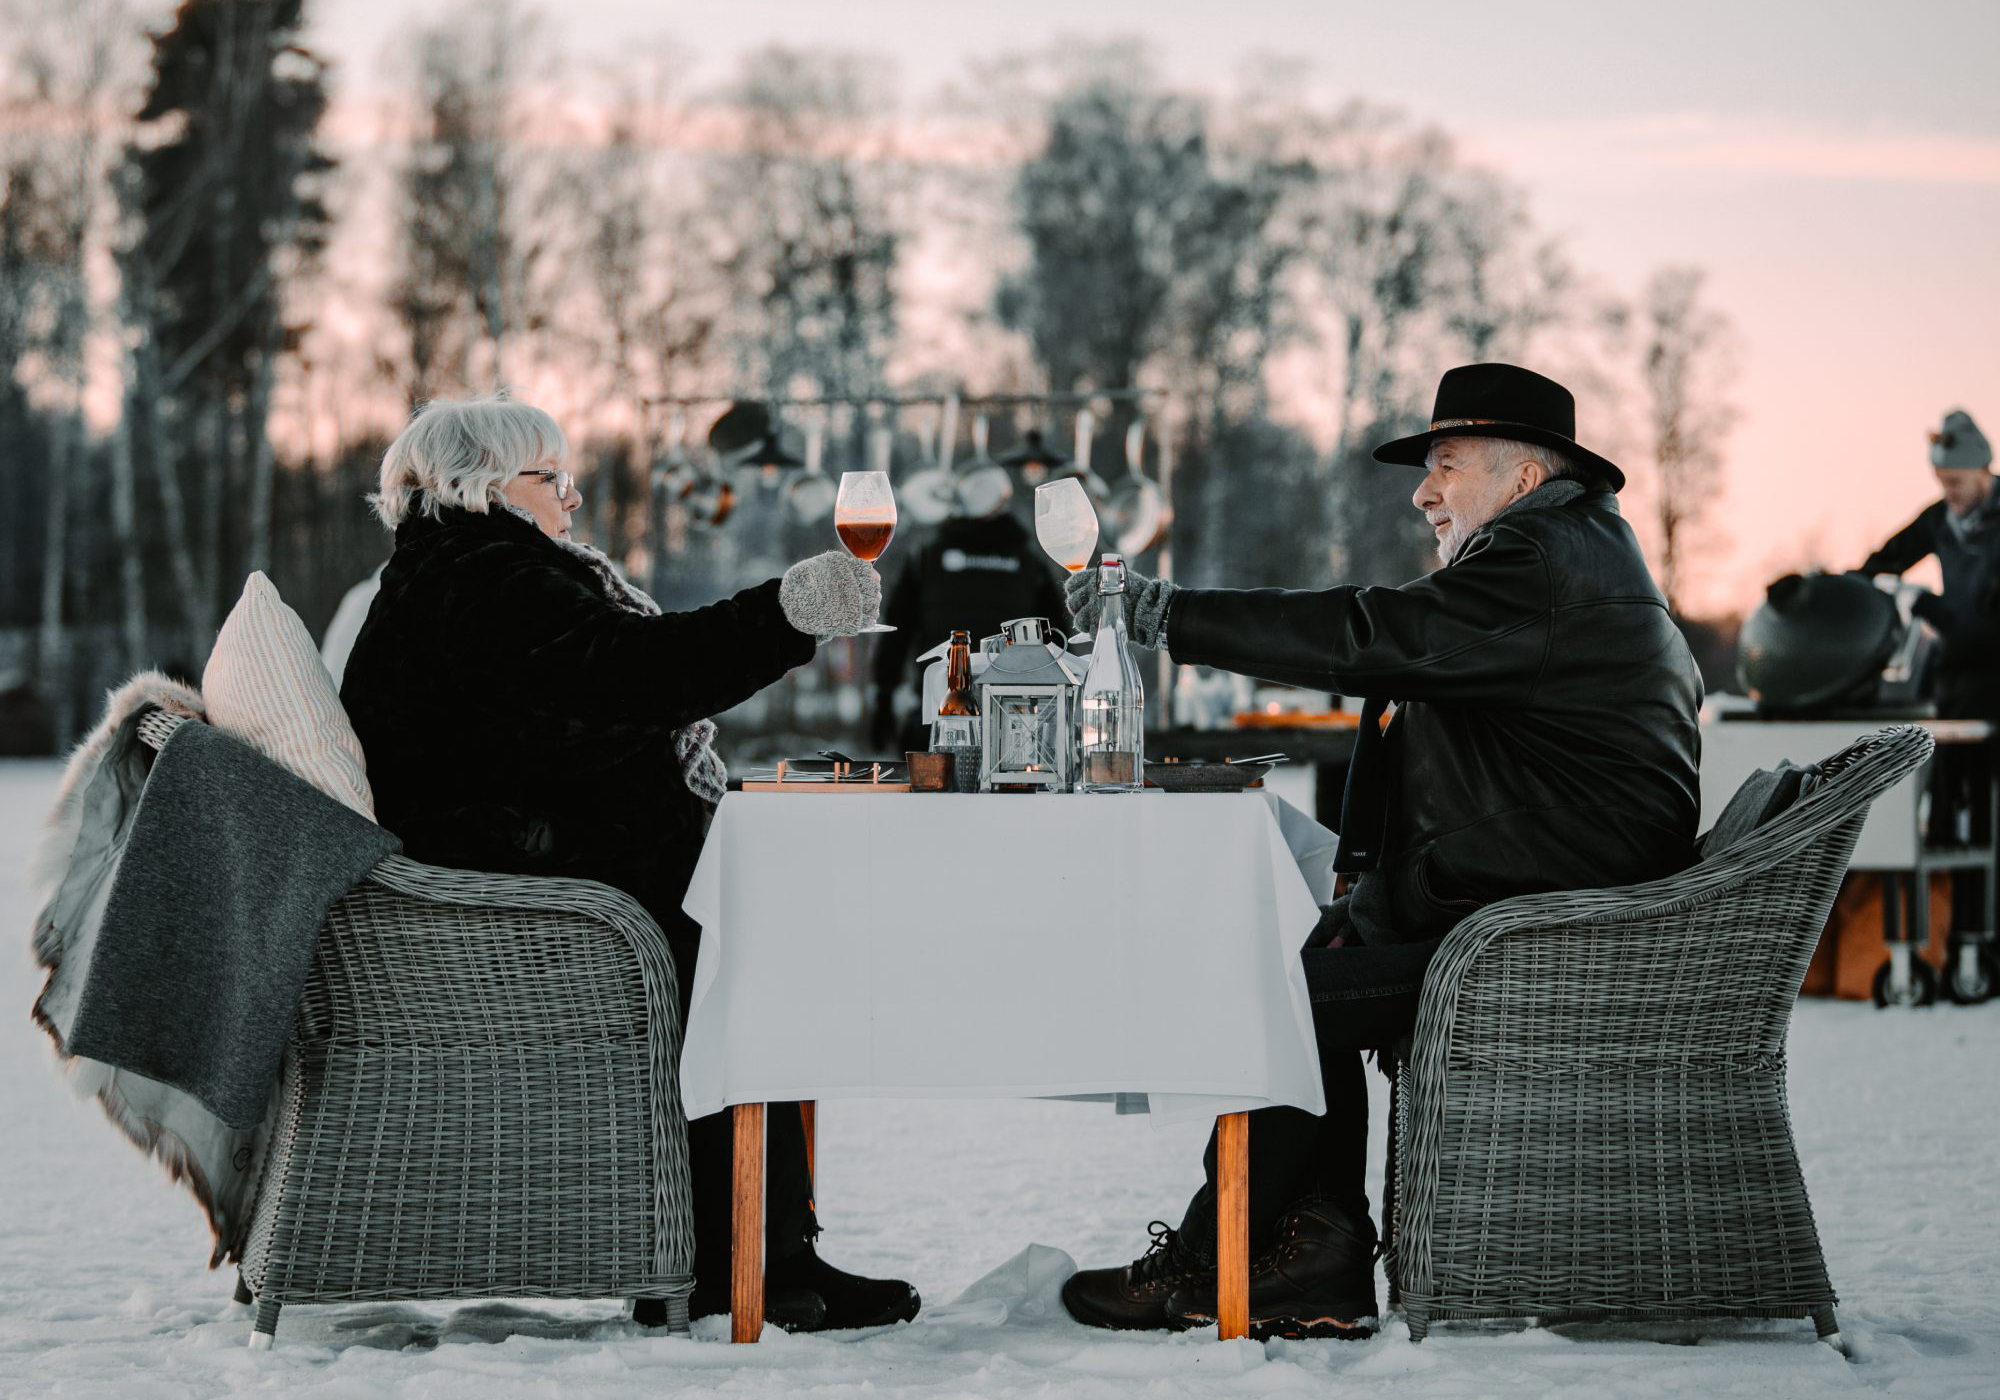 Sweden [Katrinelund] コロナ規制で誕生した“氷上レストラン”がポップアップで復活